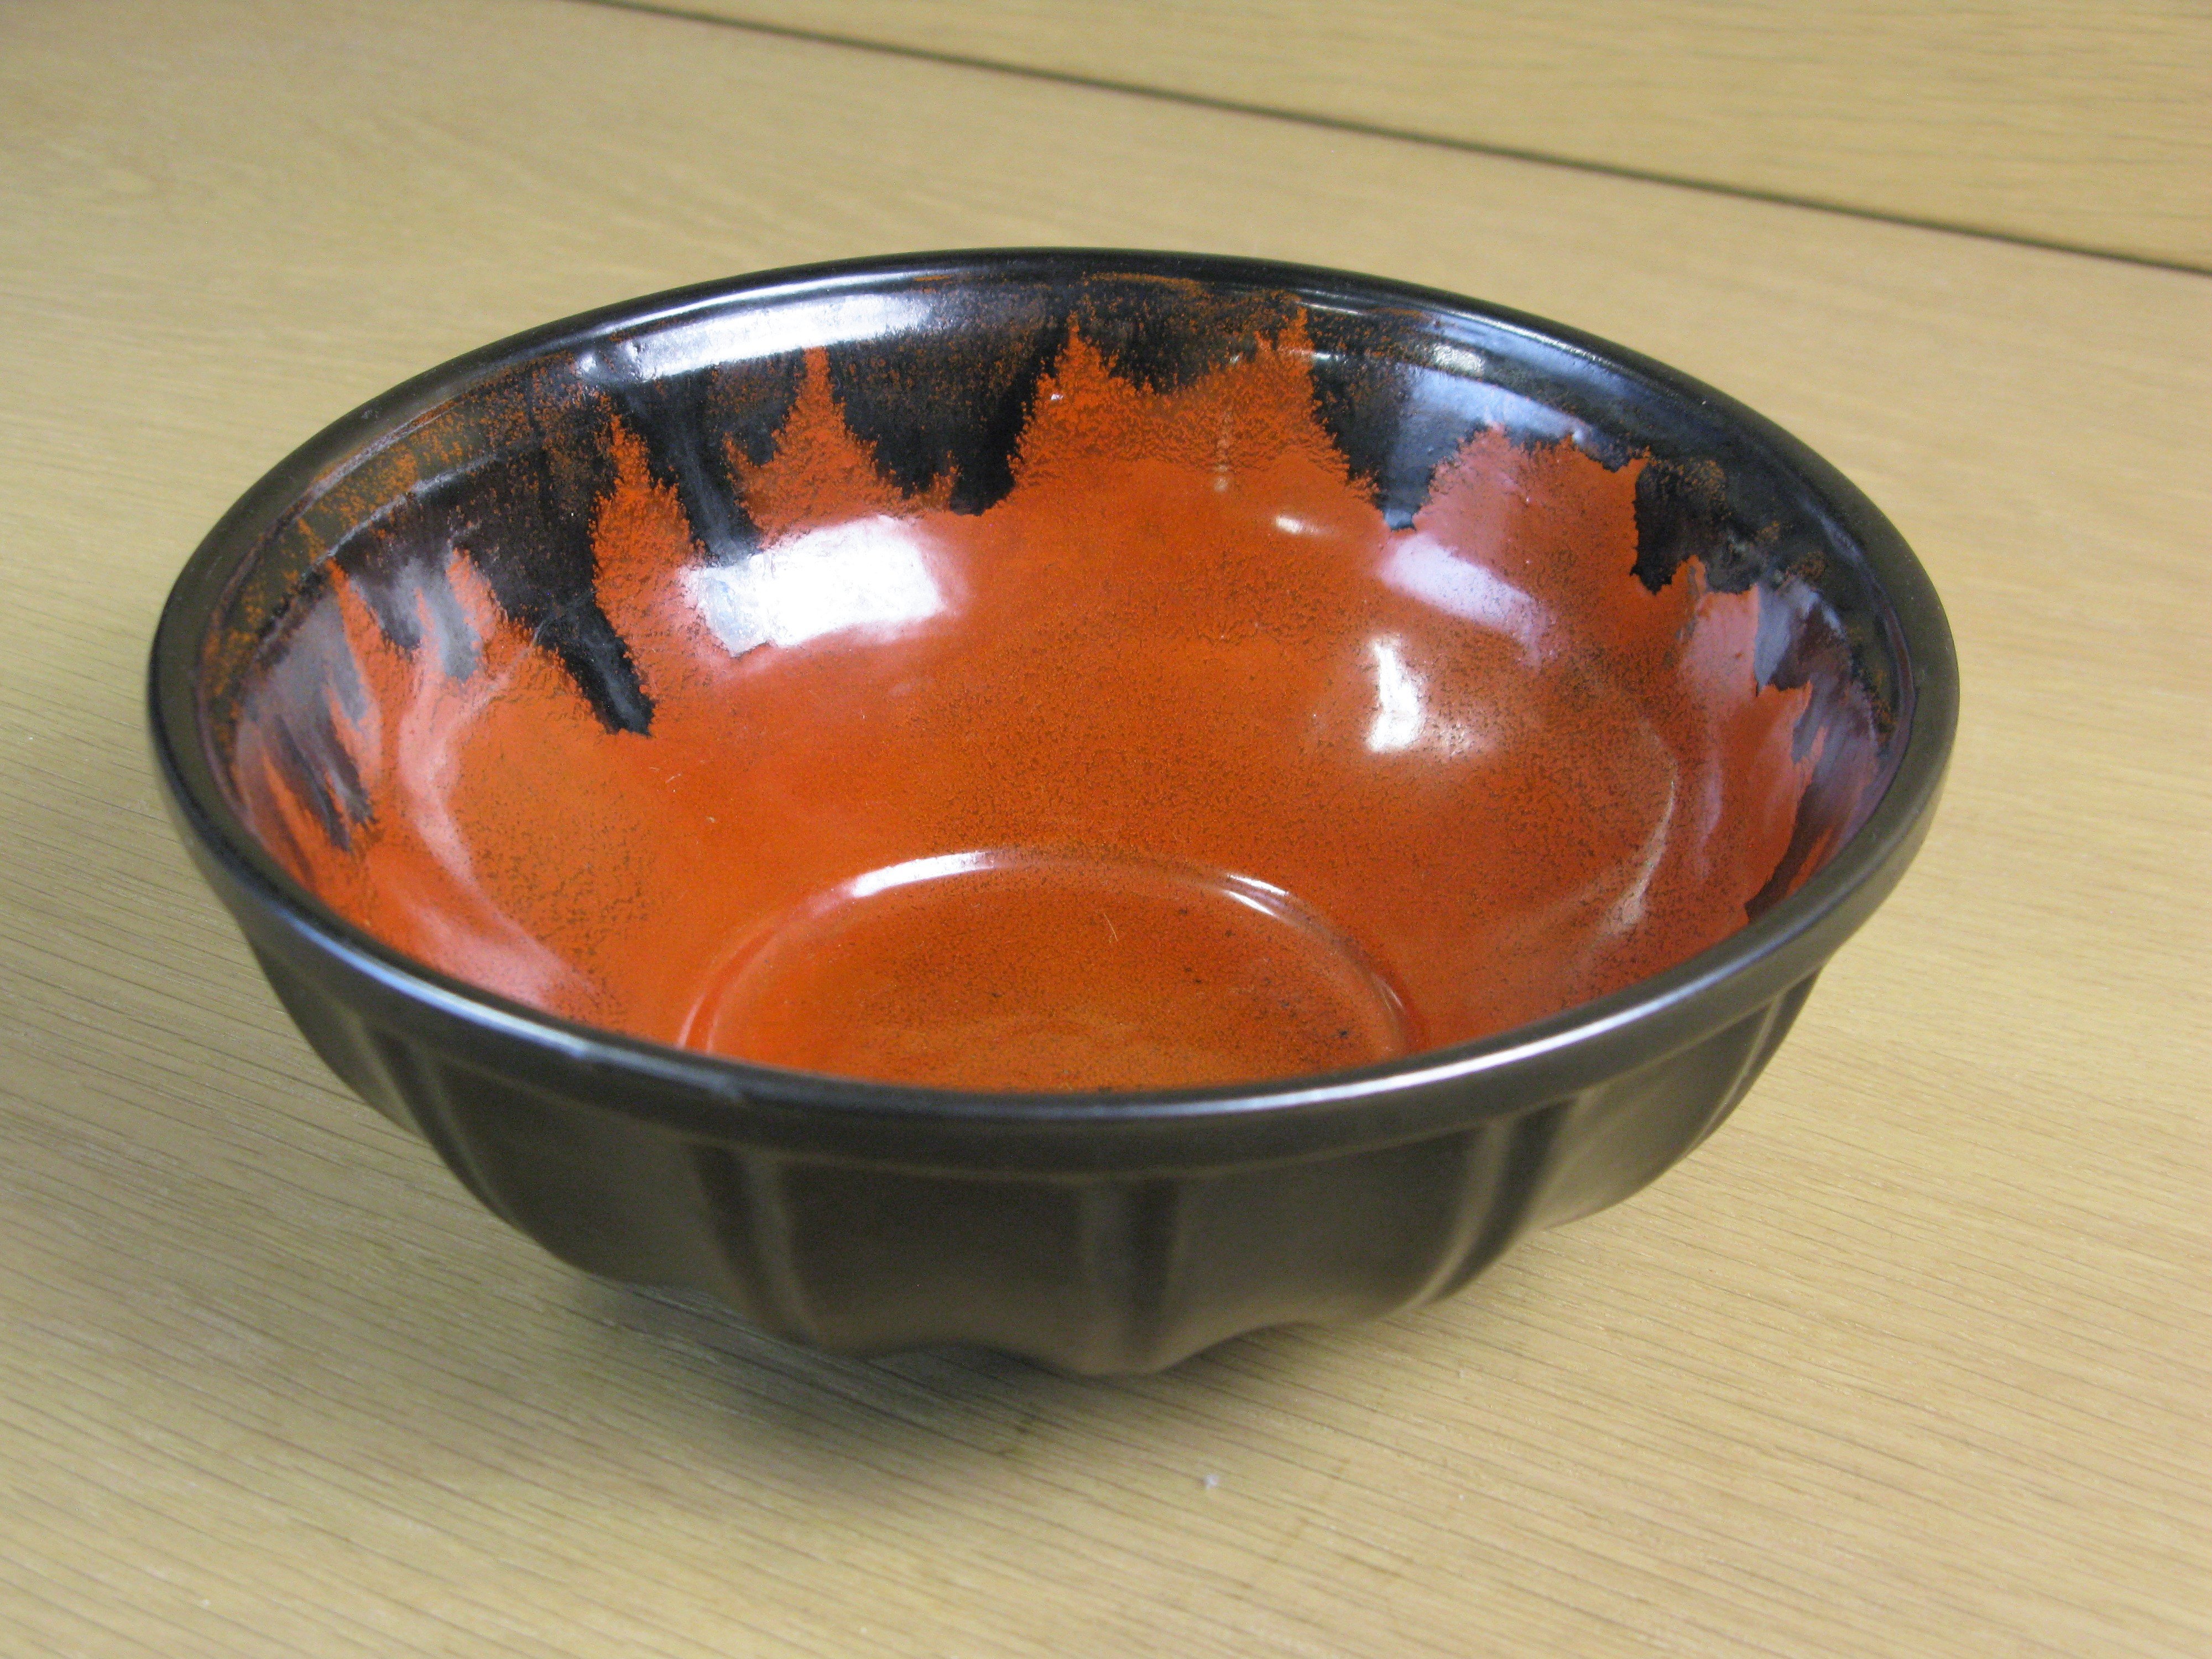 black/orange bowl 139